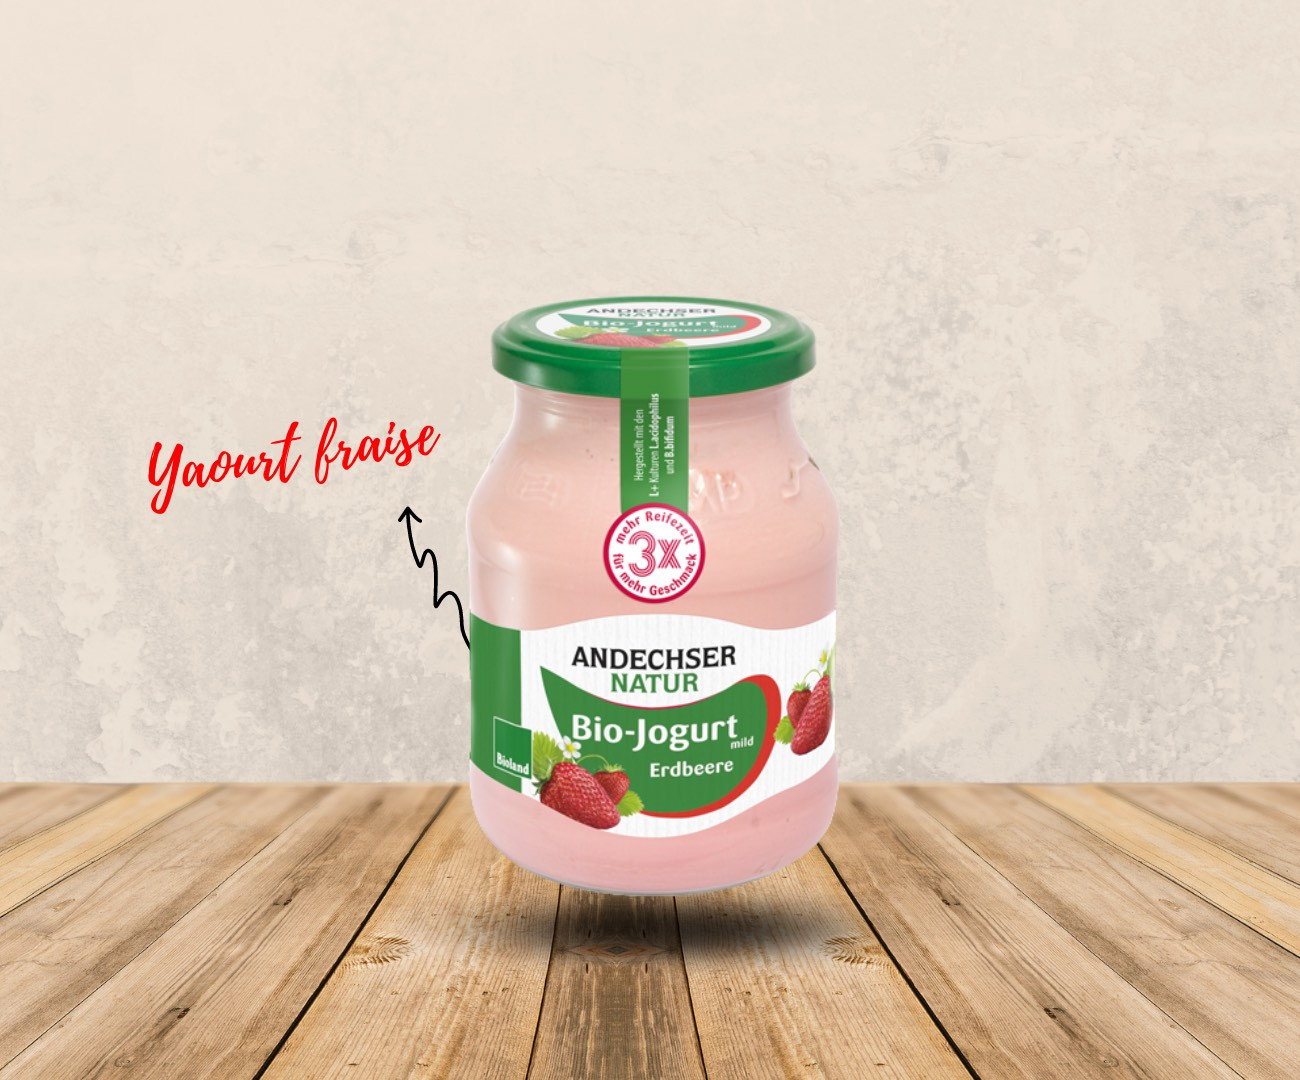 Yaourt fraise 3.7% 500g